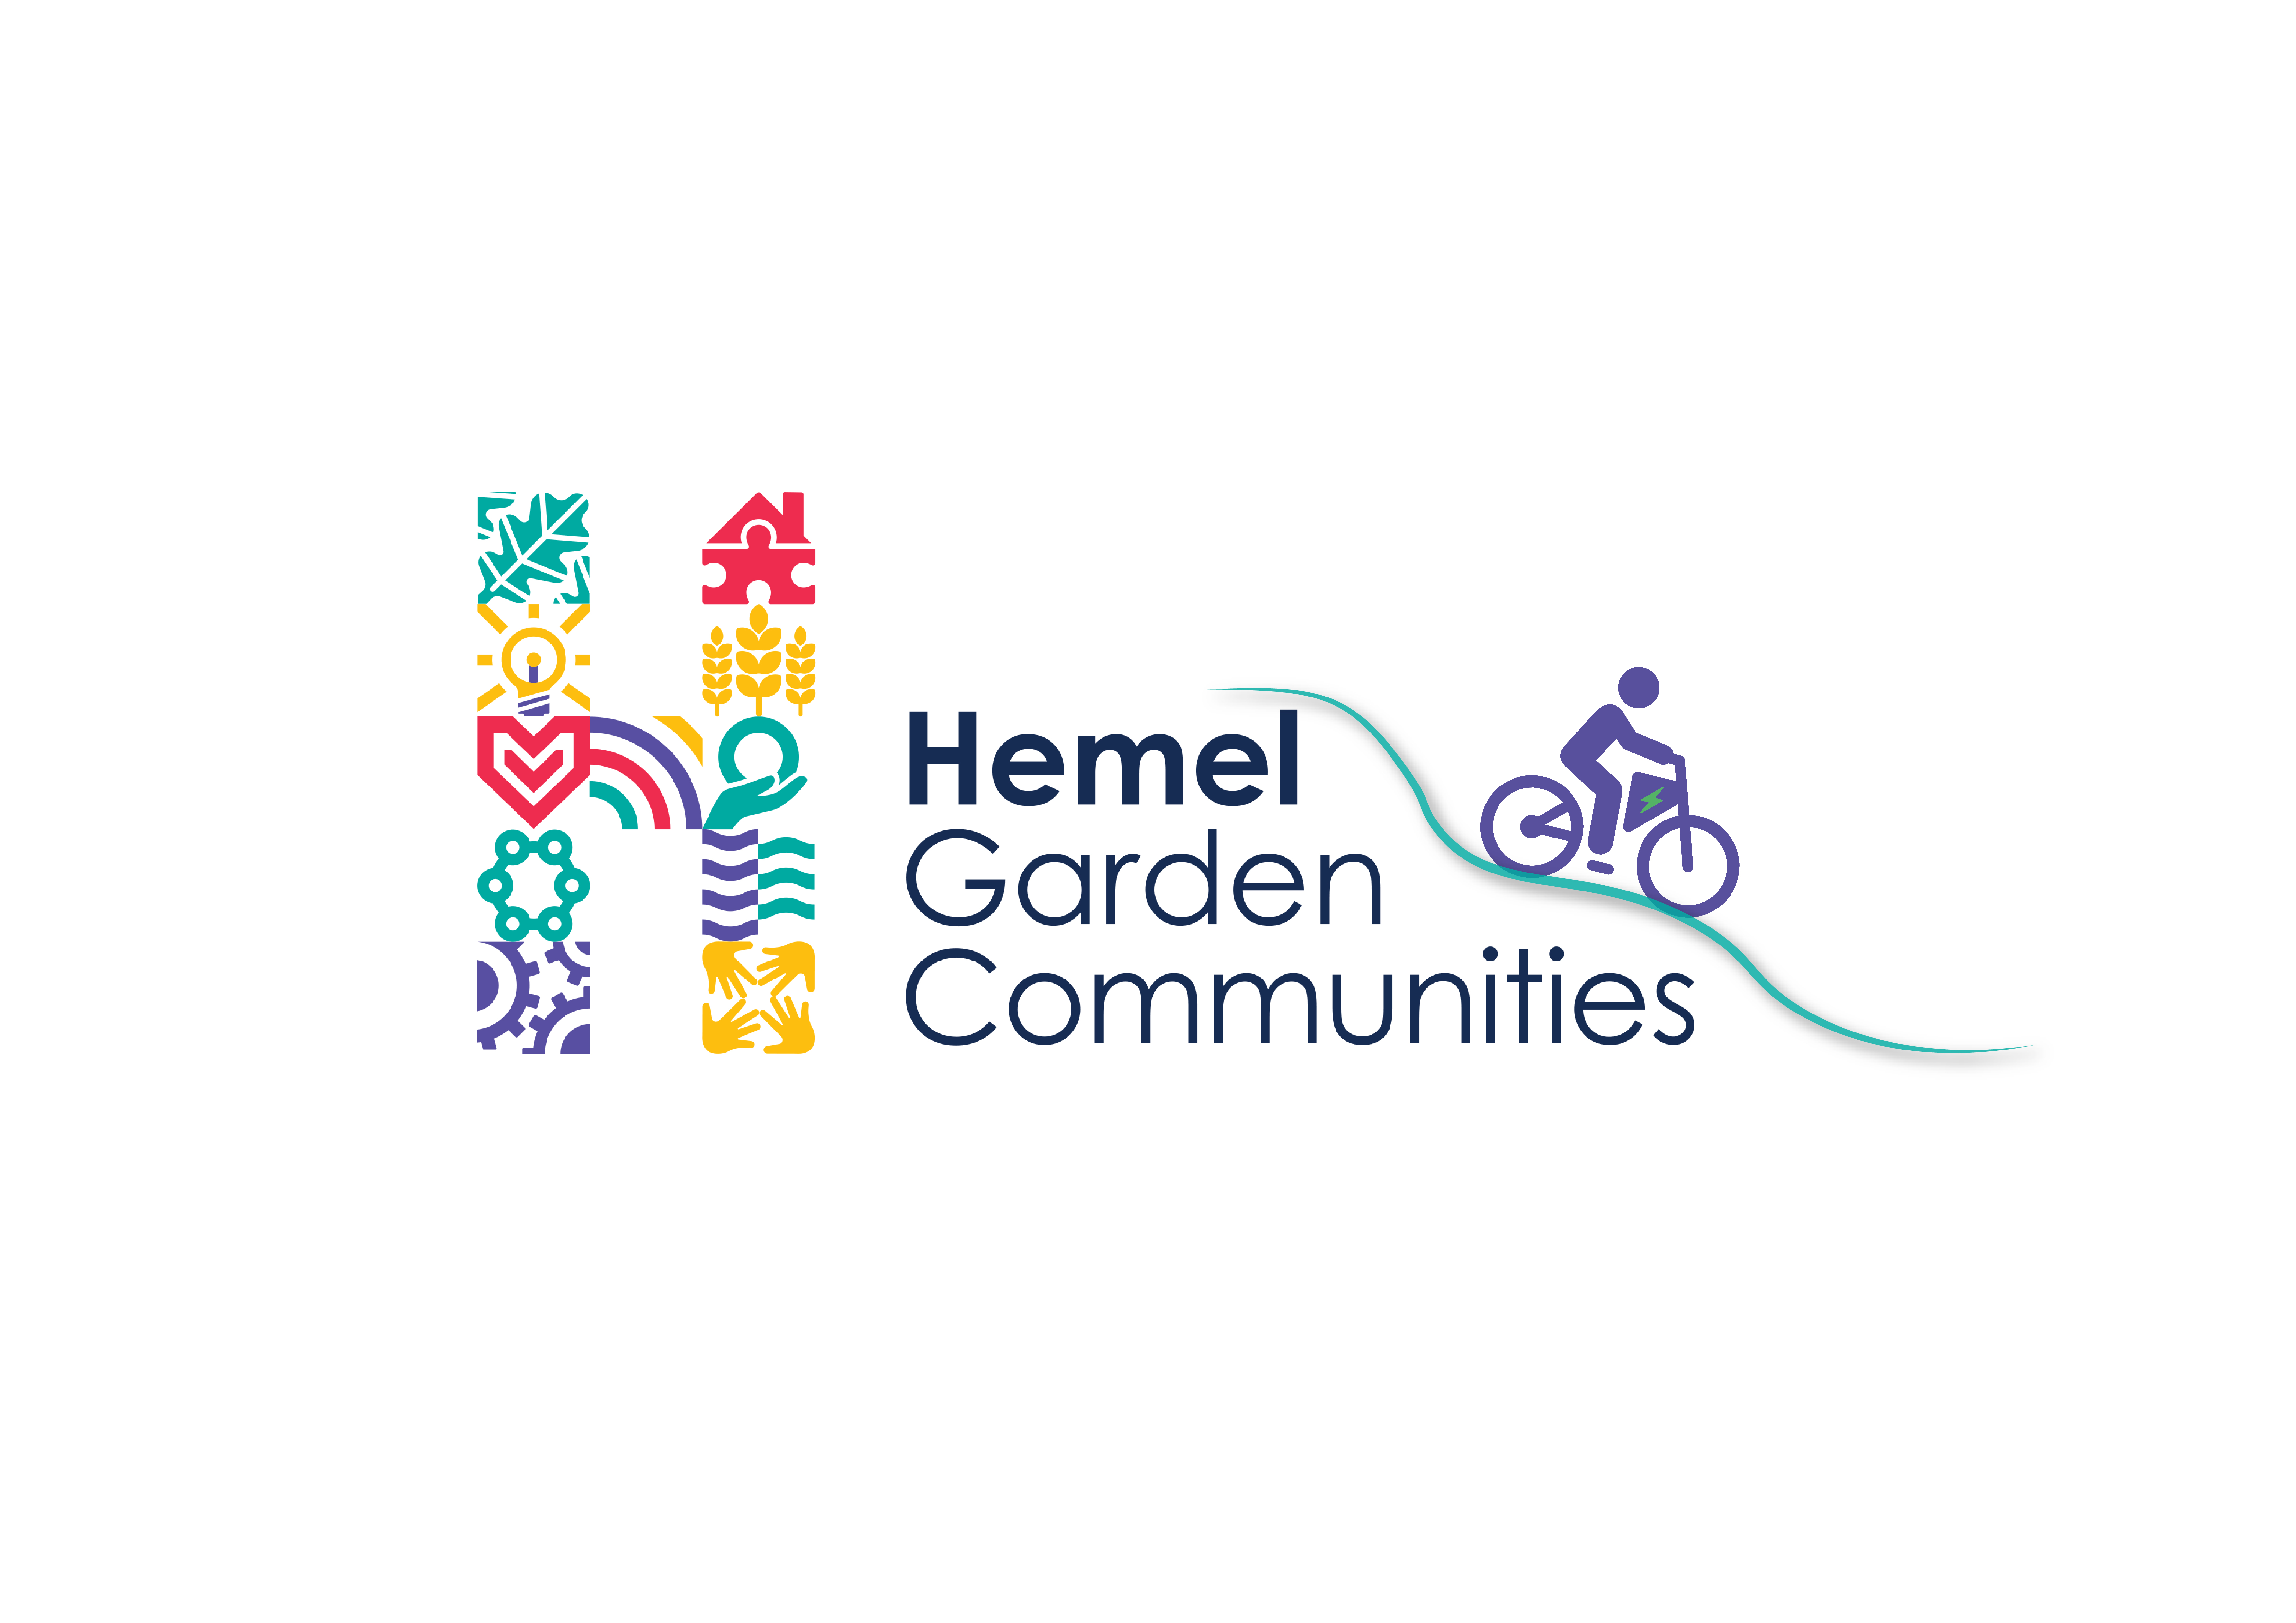 Help shape future transformation of Hemel